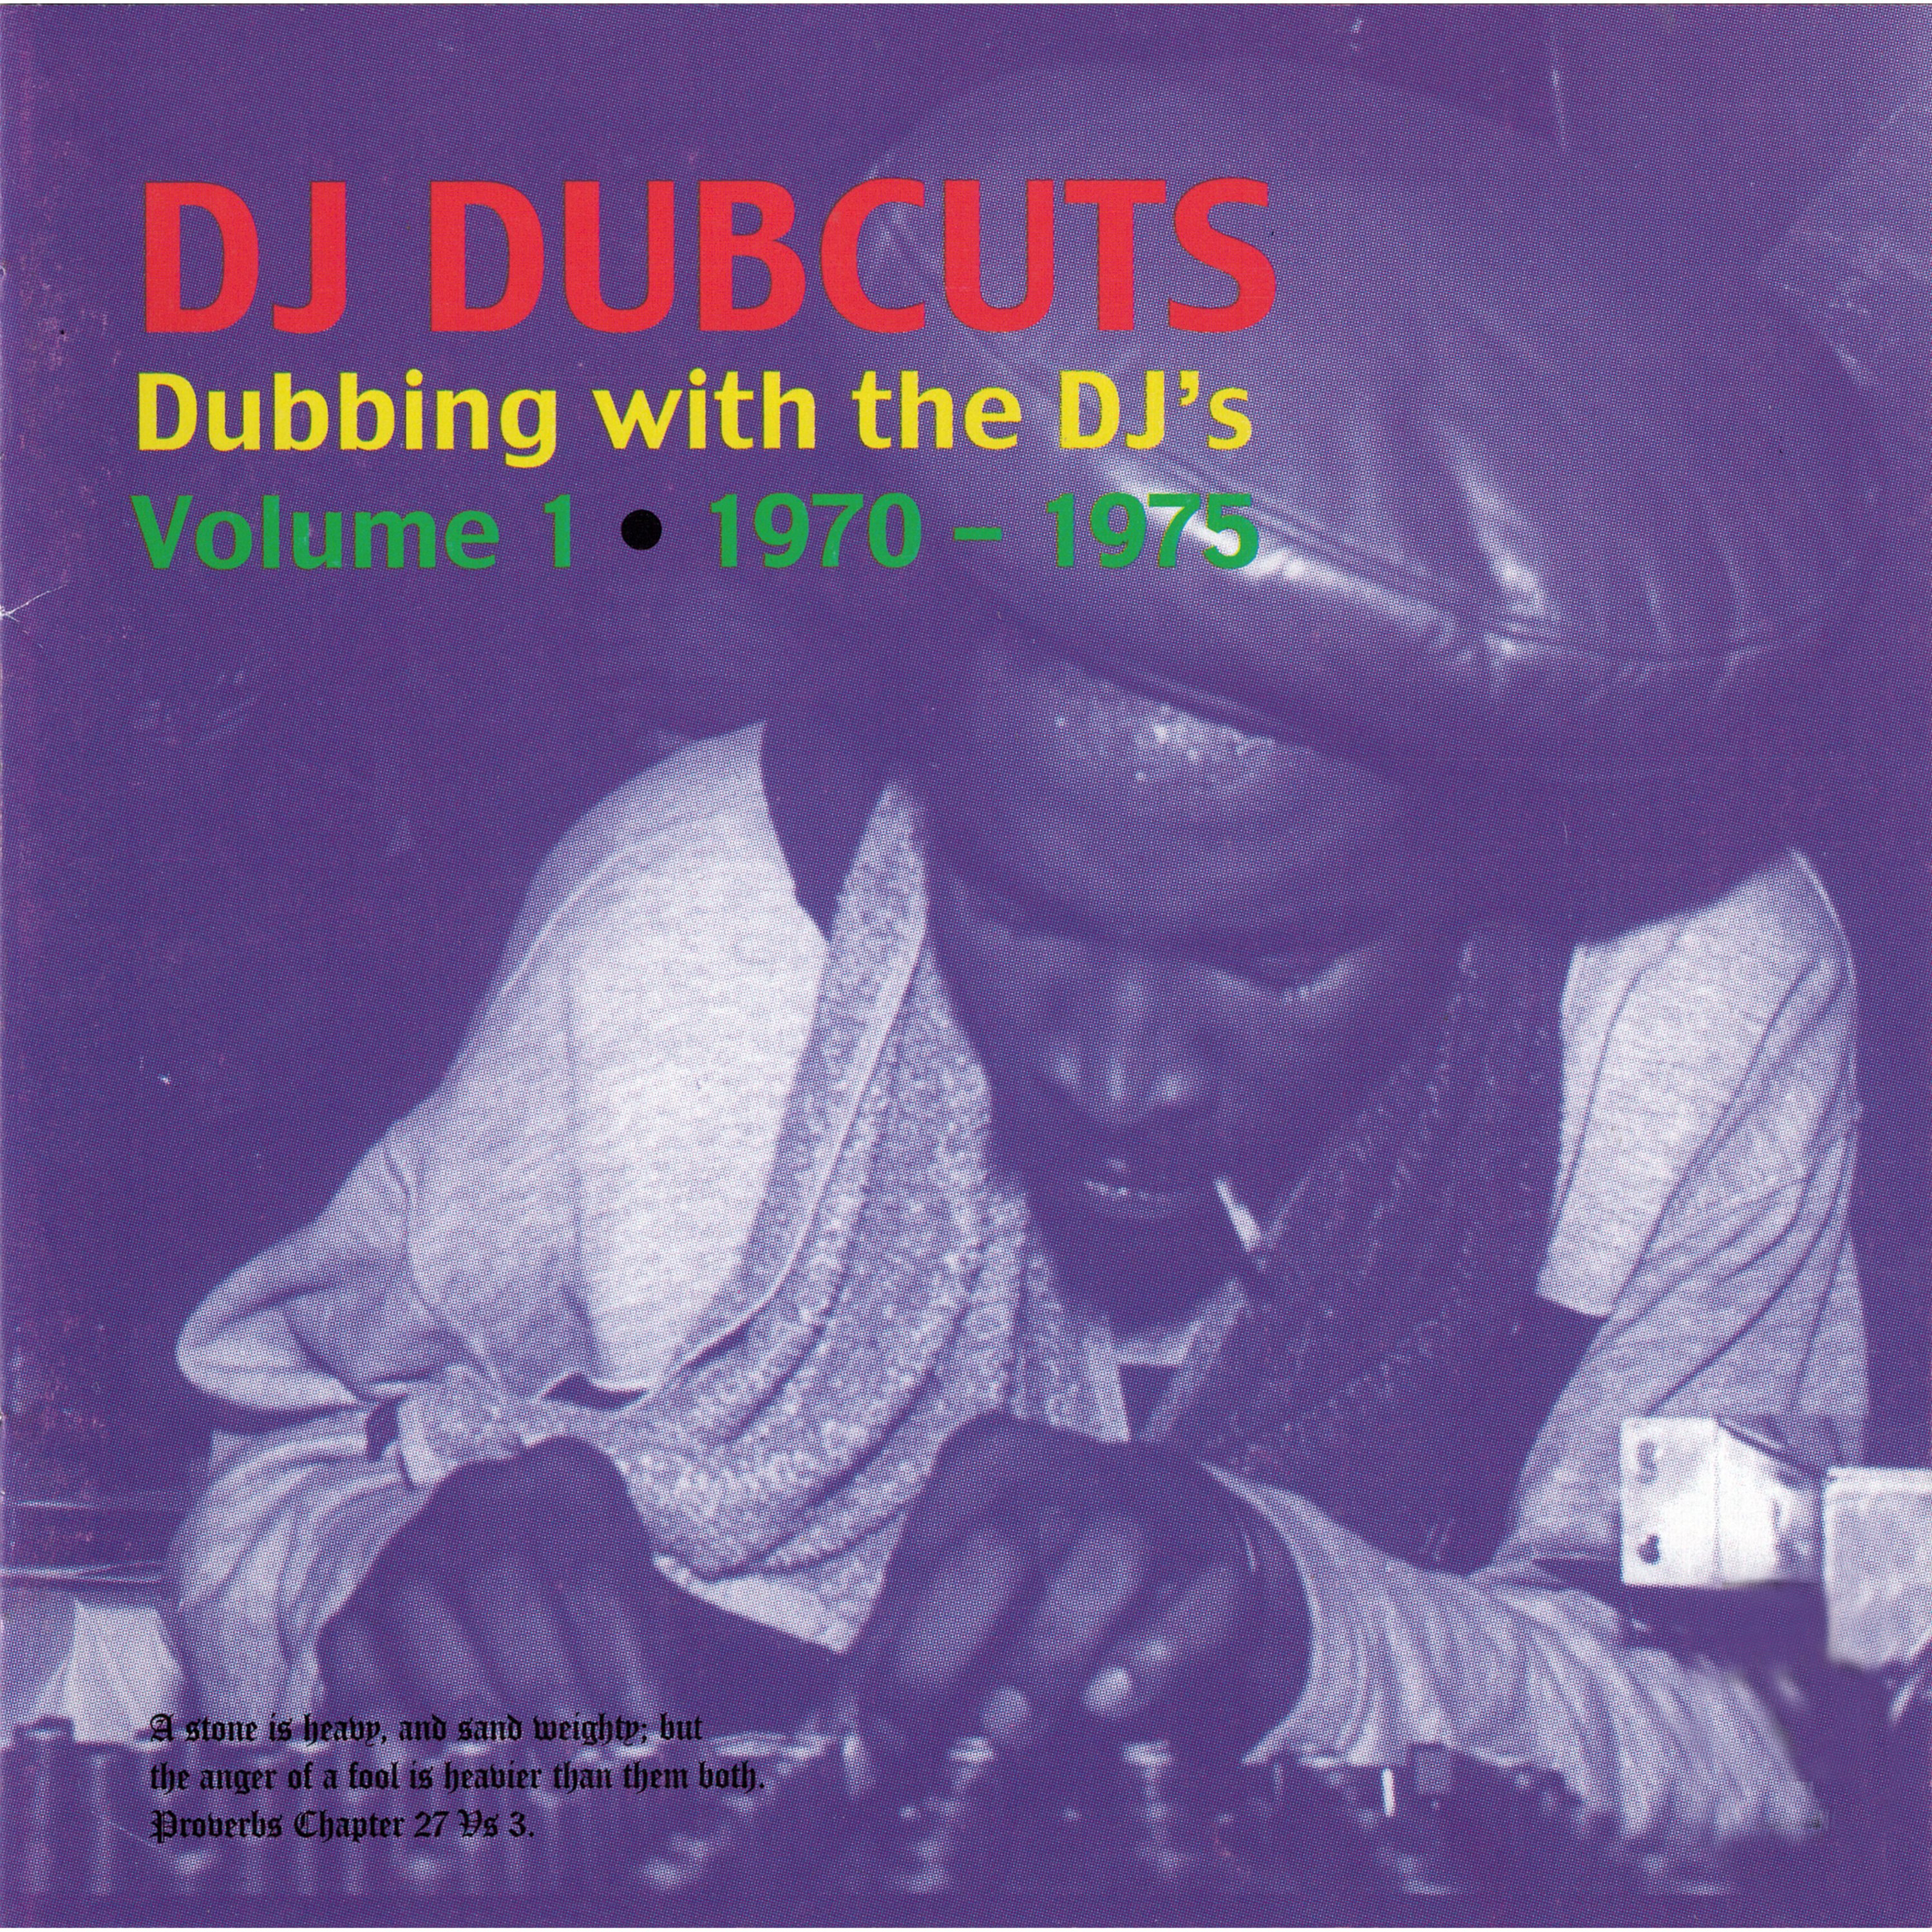 Tubby's Dub Skank (Bonus Track)